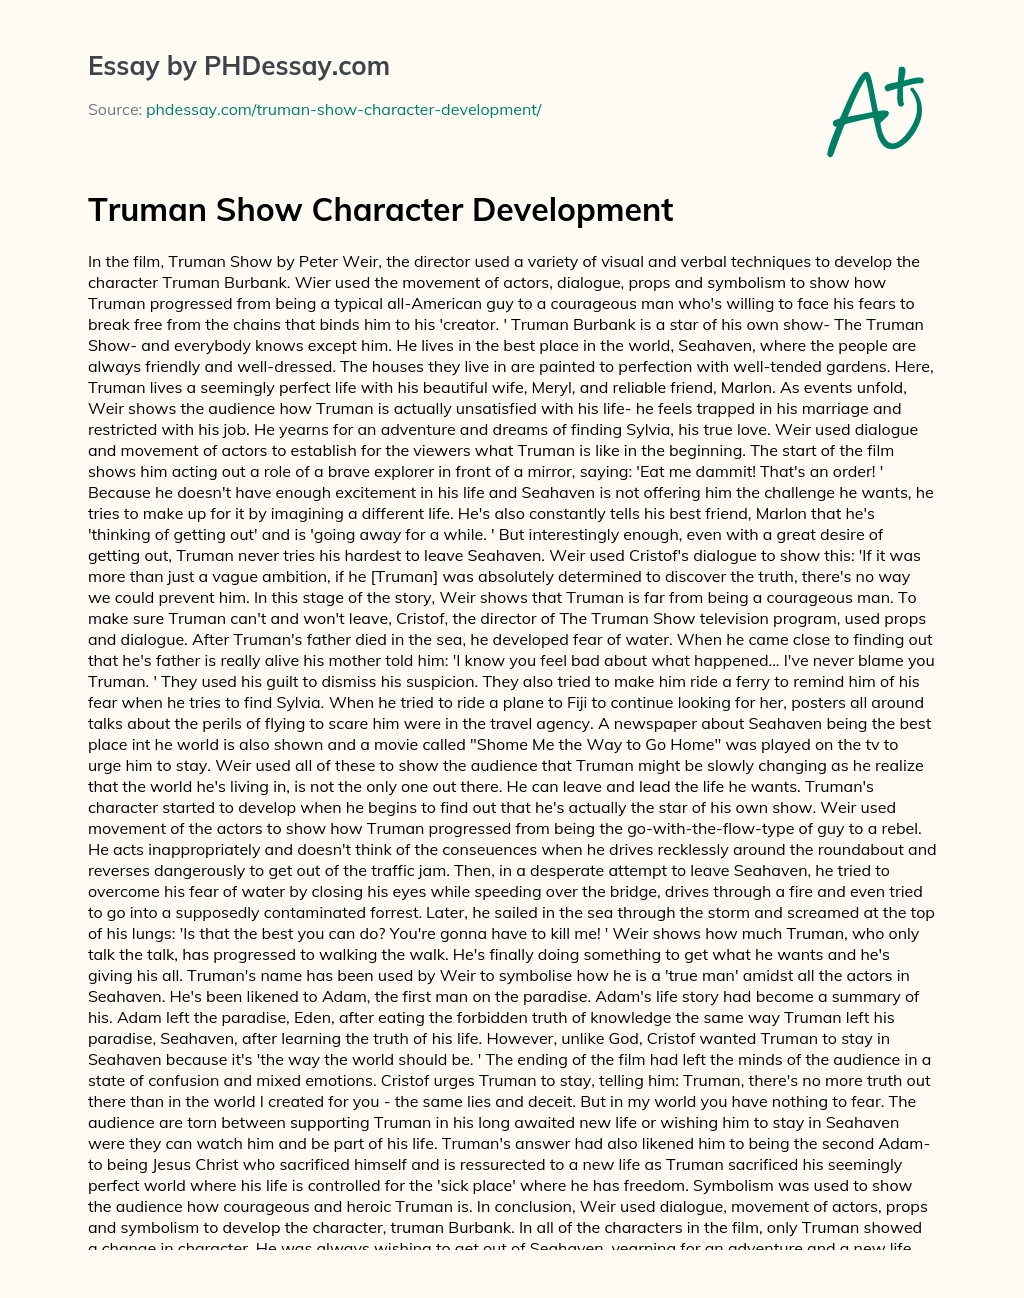 Truman Show Character Development essay